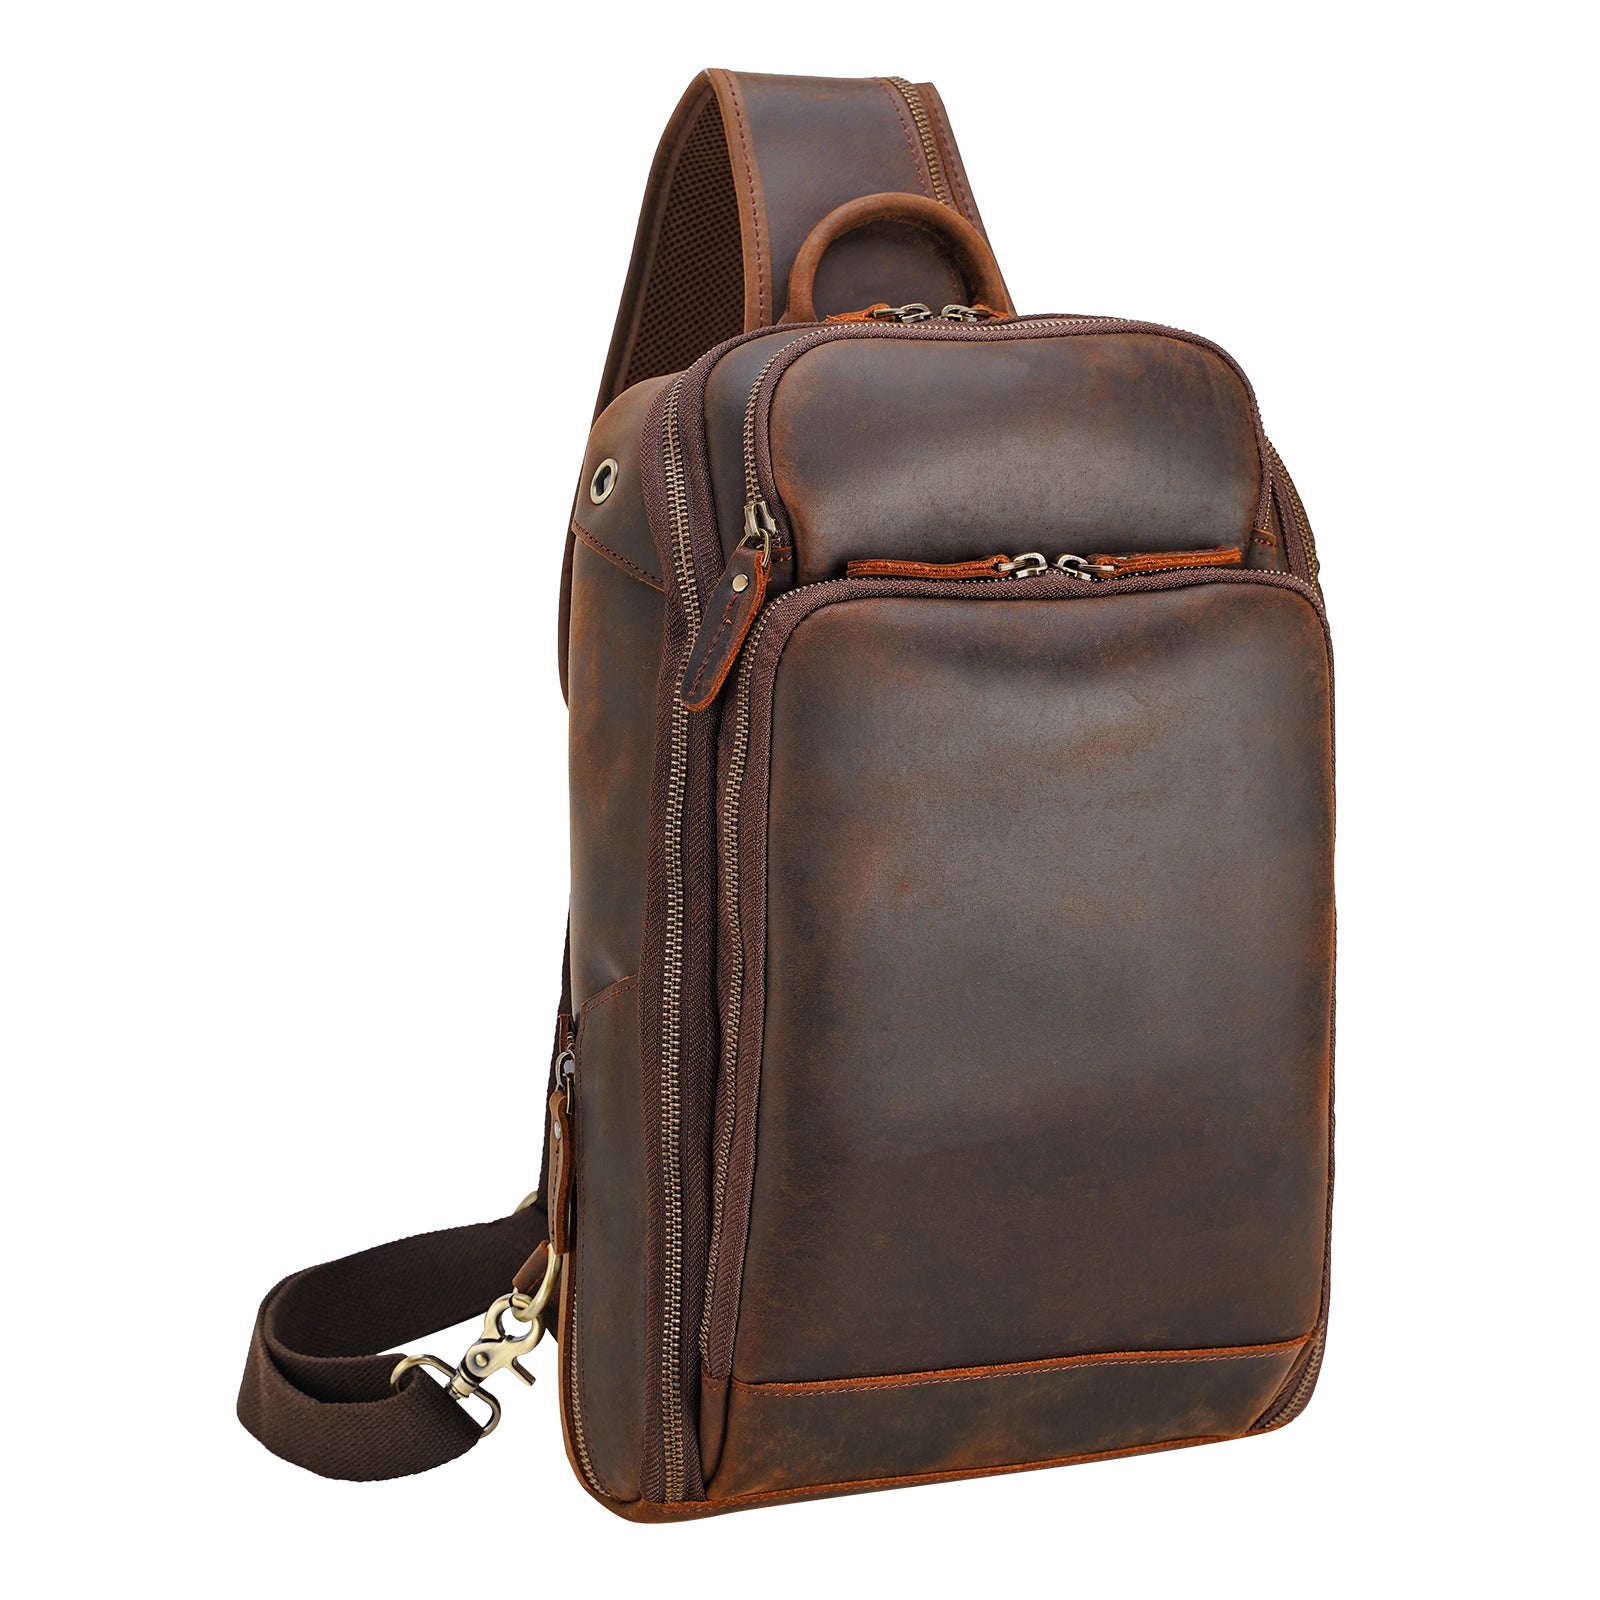 Polare Full Grain Leather Modern Style Sling Shoulder Bag Travel/Hiking Daypack (Dark Brown)